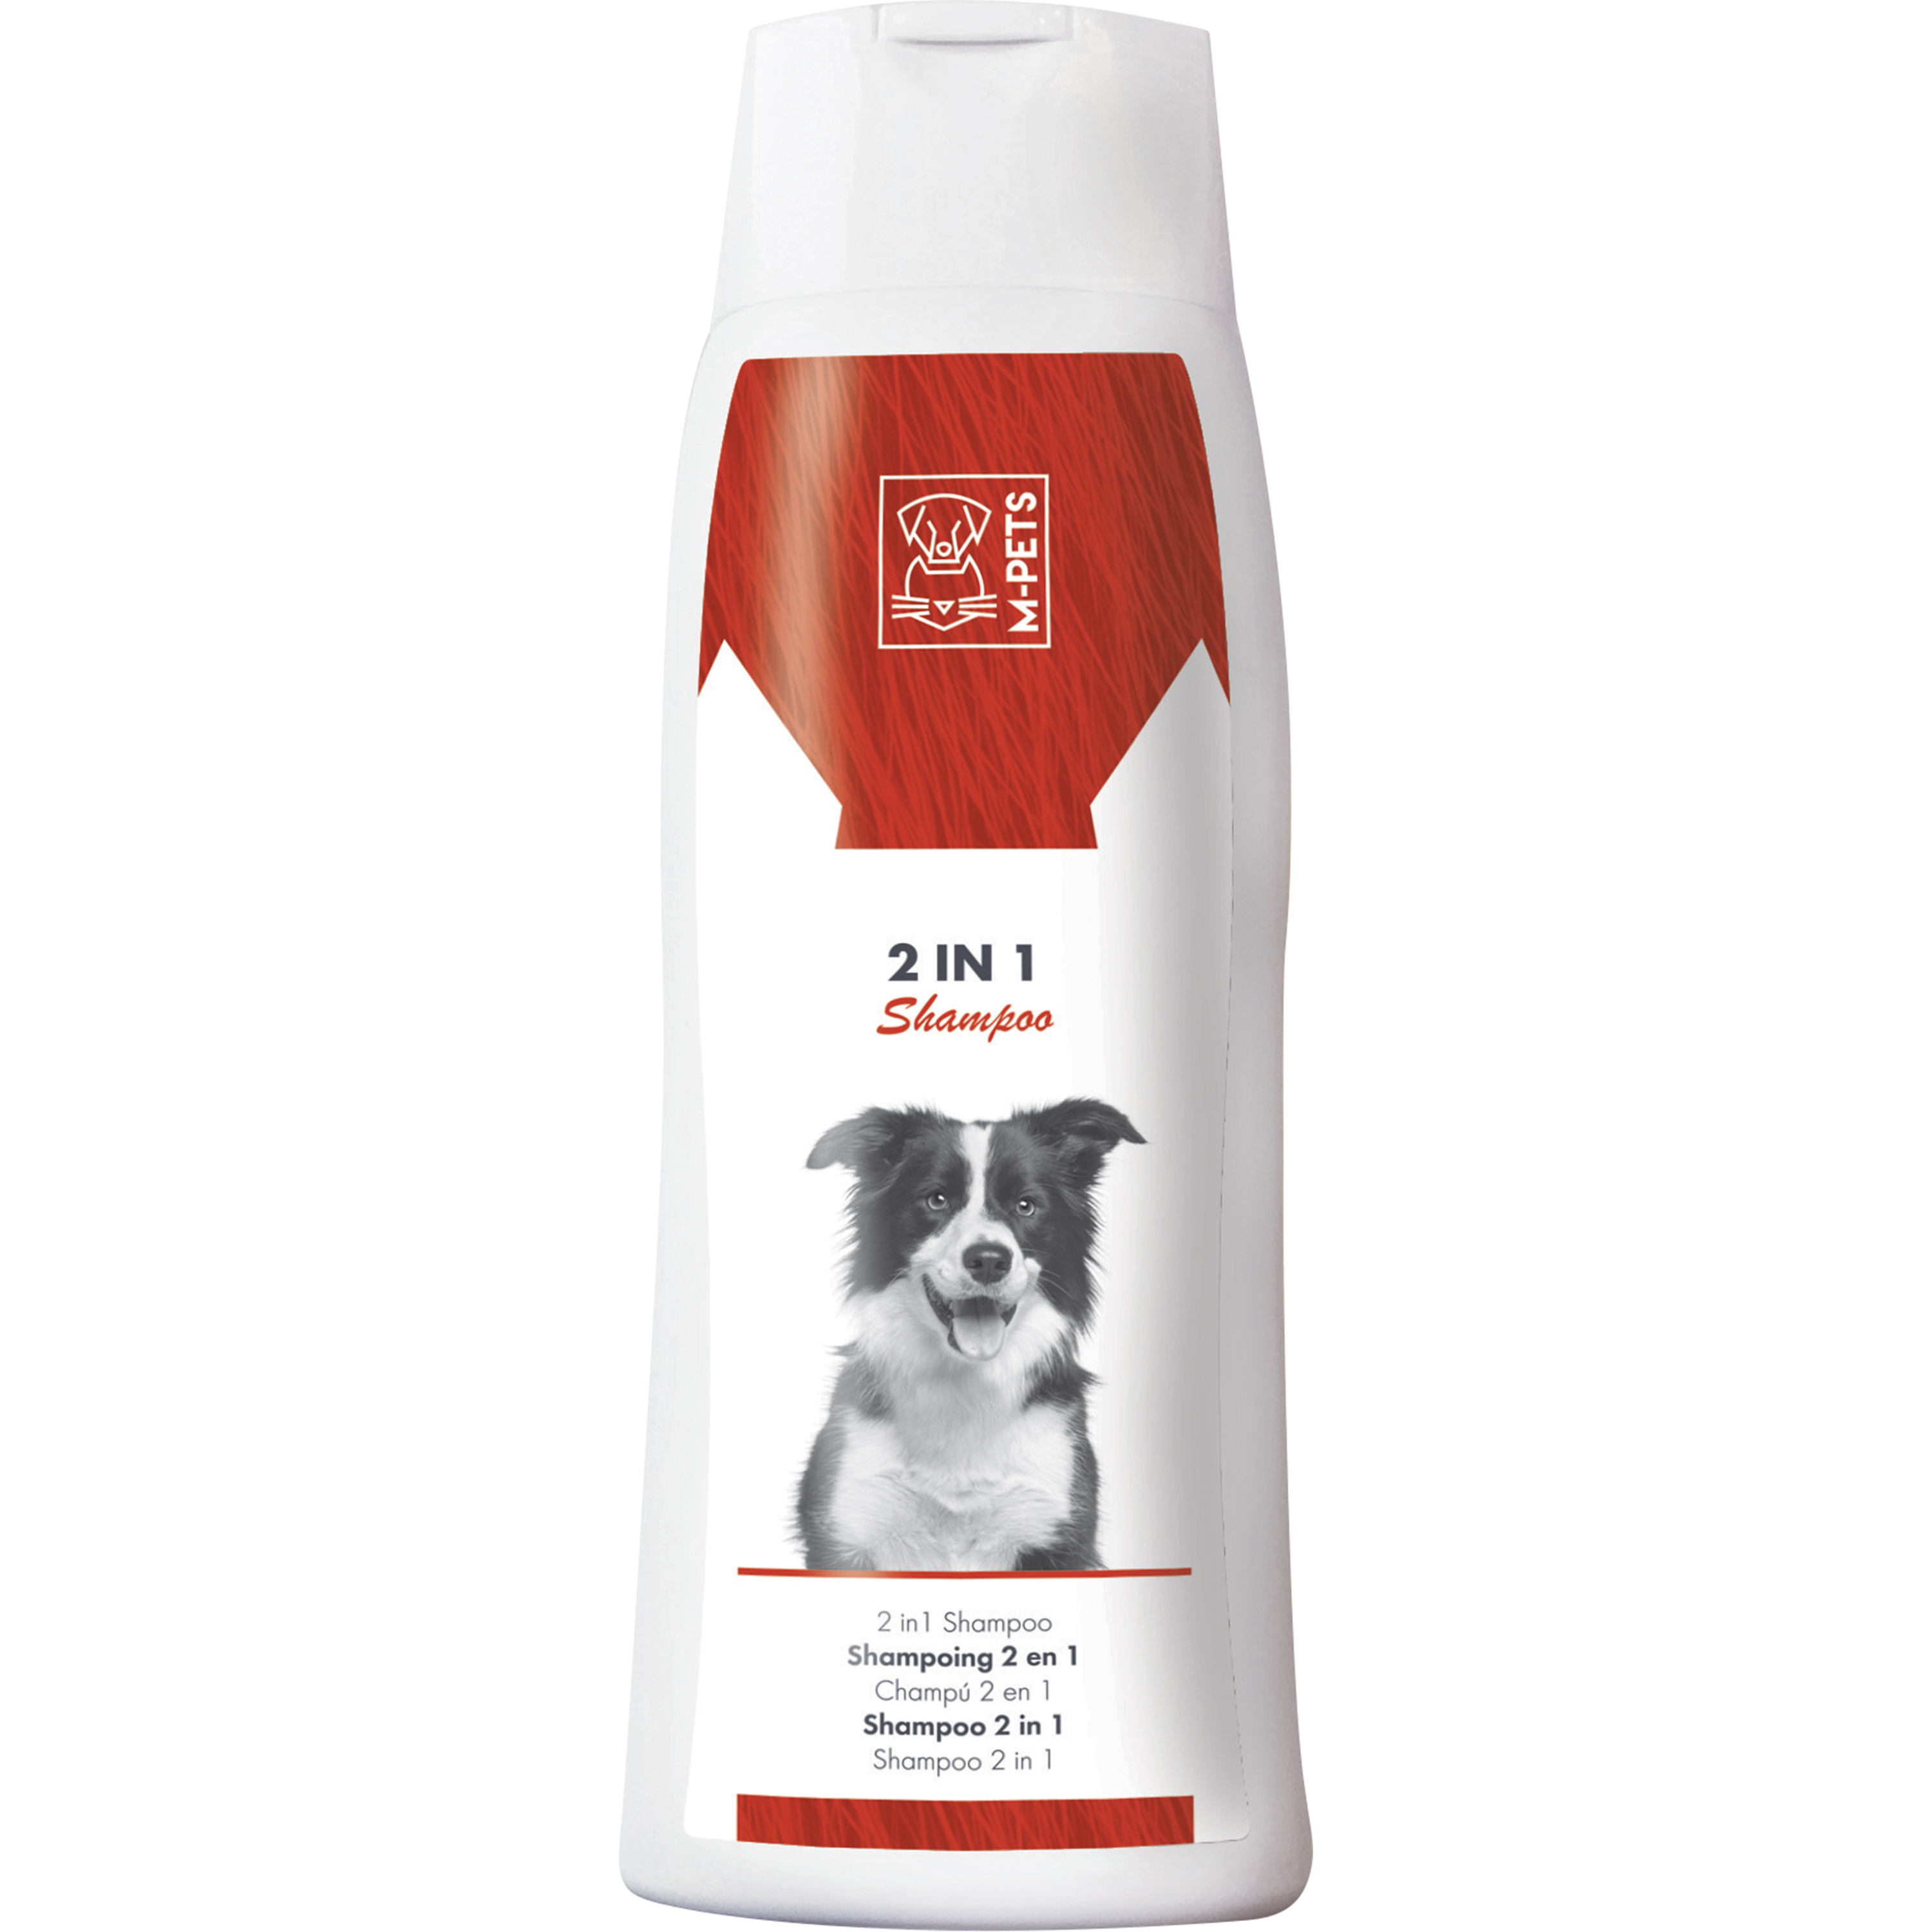 Hundschampo & Balsam M-Pets 2in1 250ml